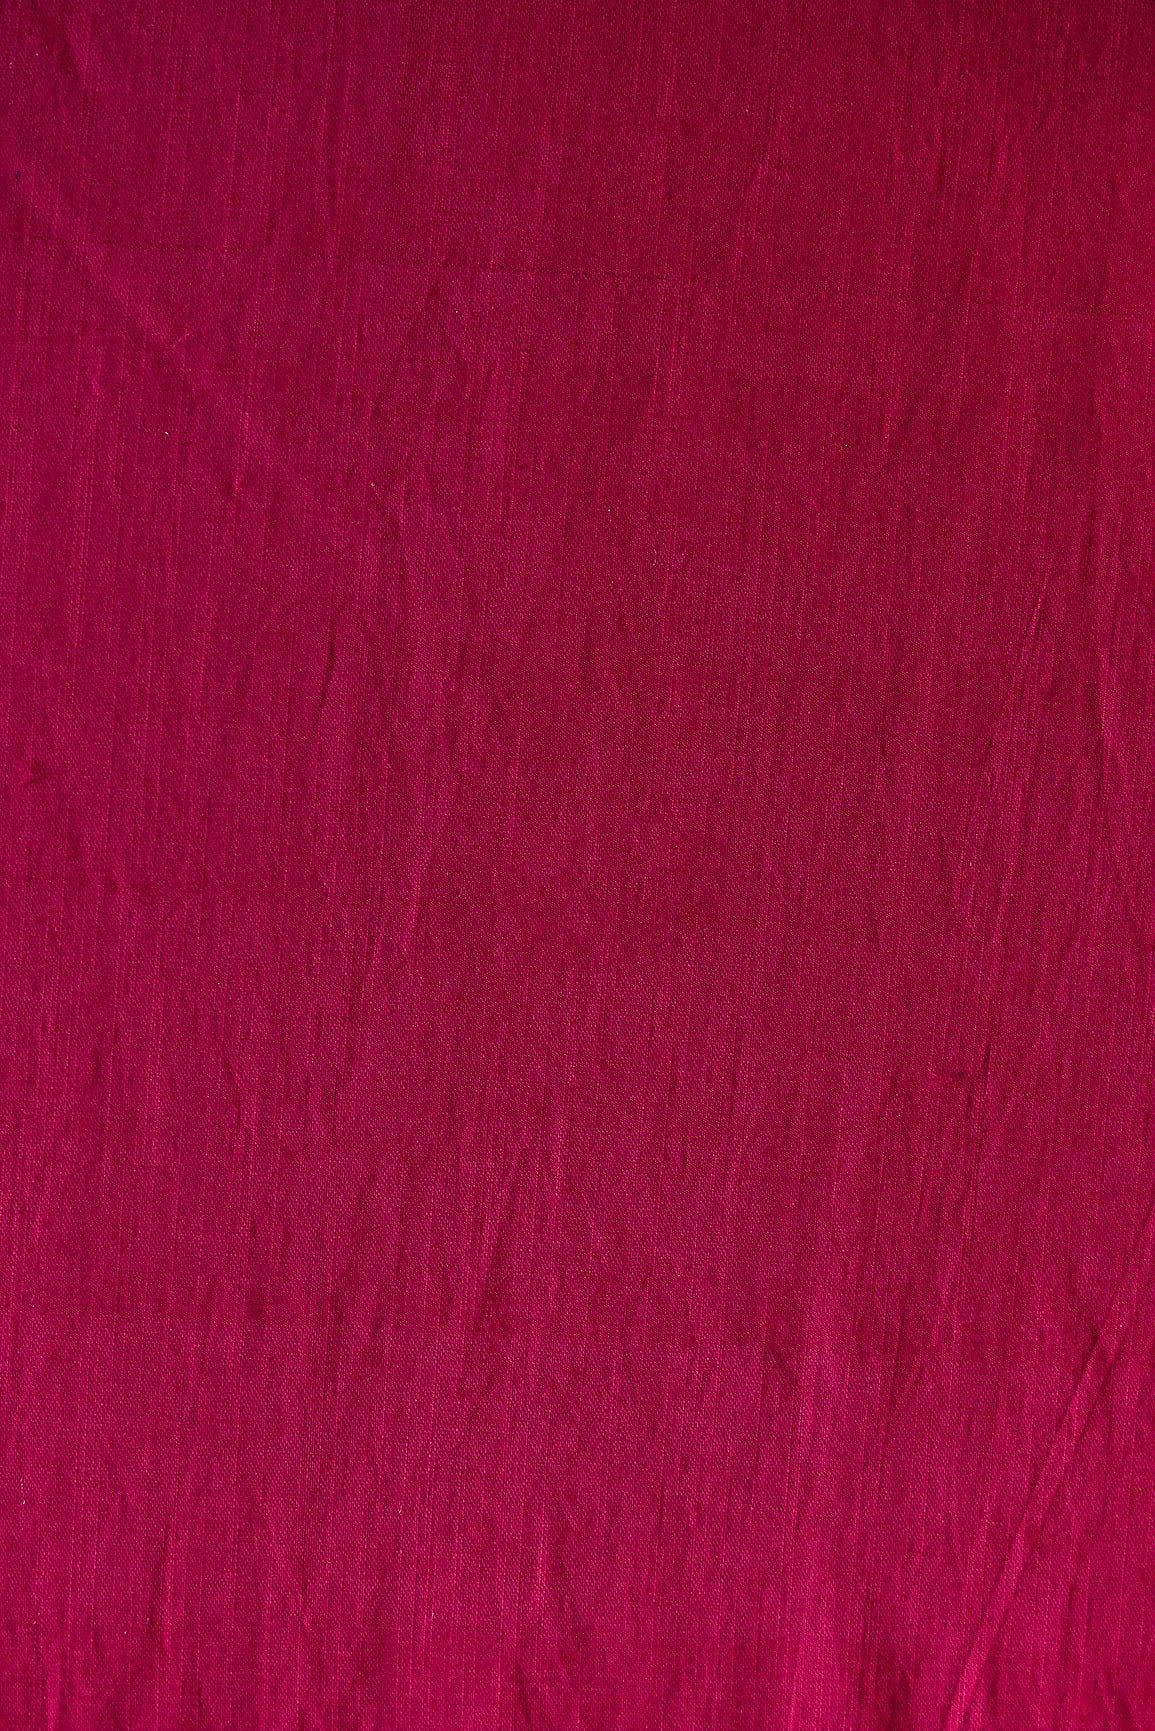 doeraa Plain Fabrics Rani Raw Silk Fabric